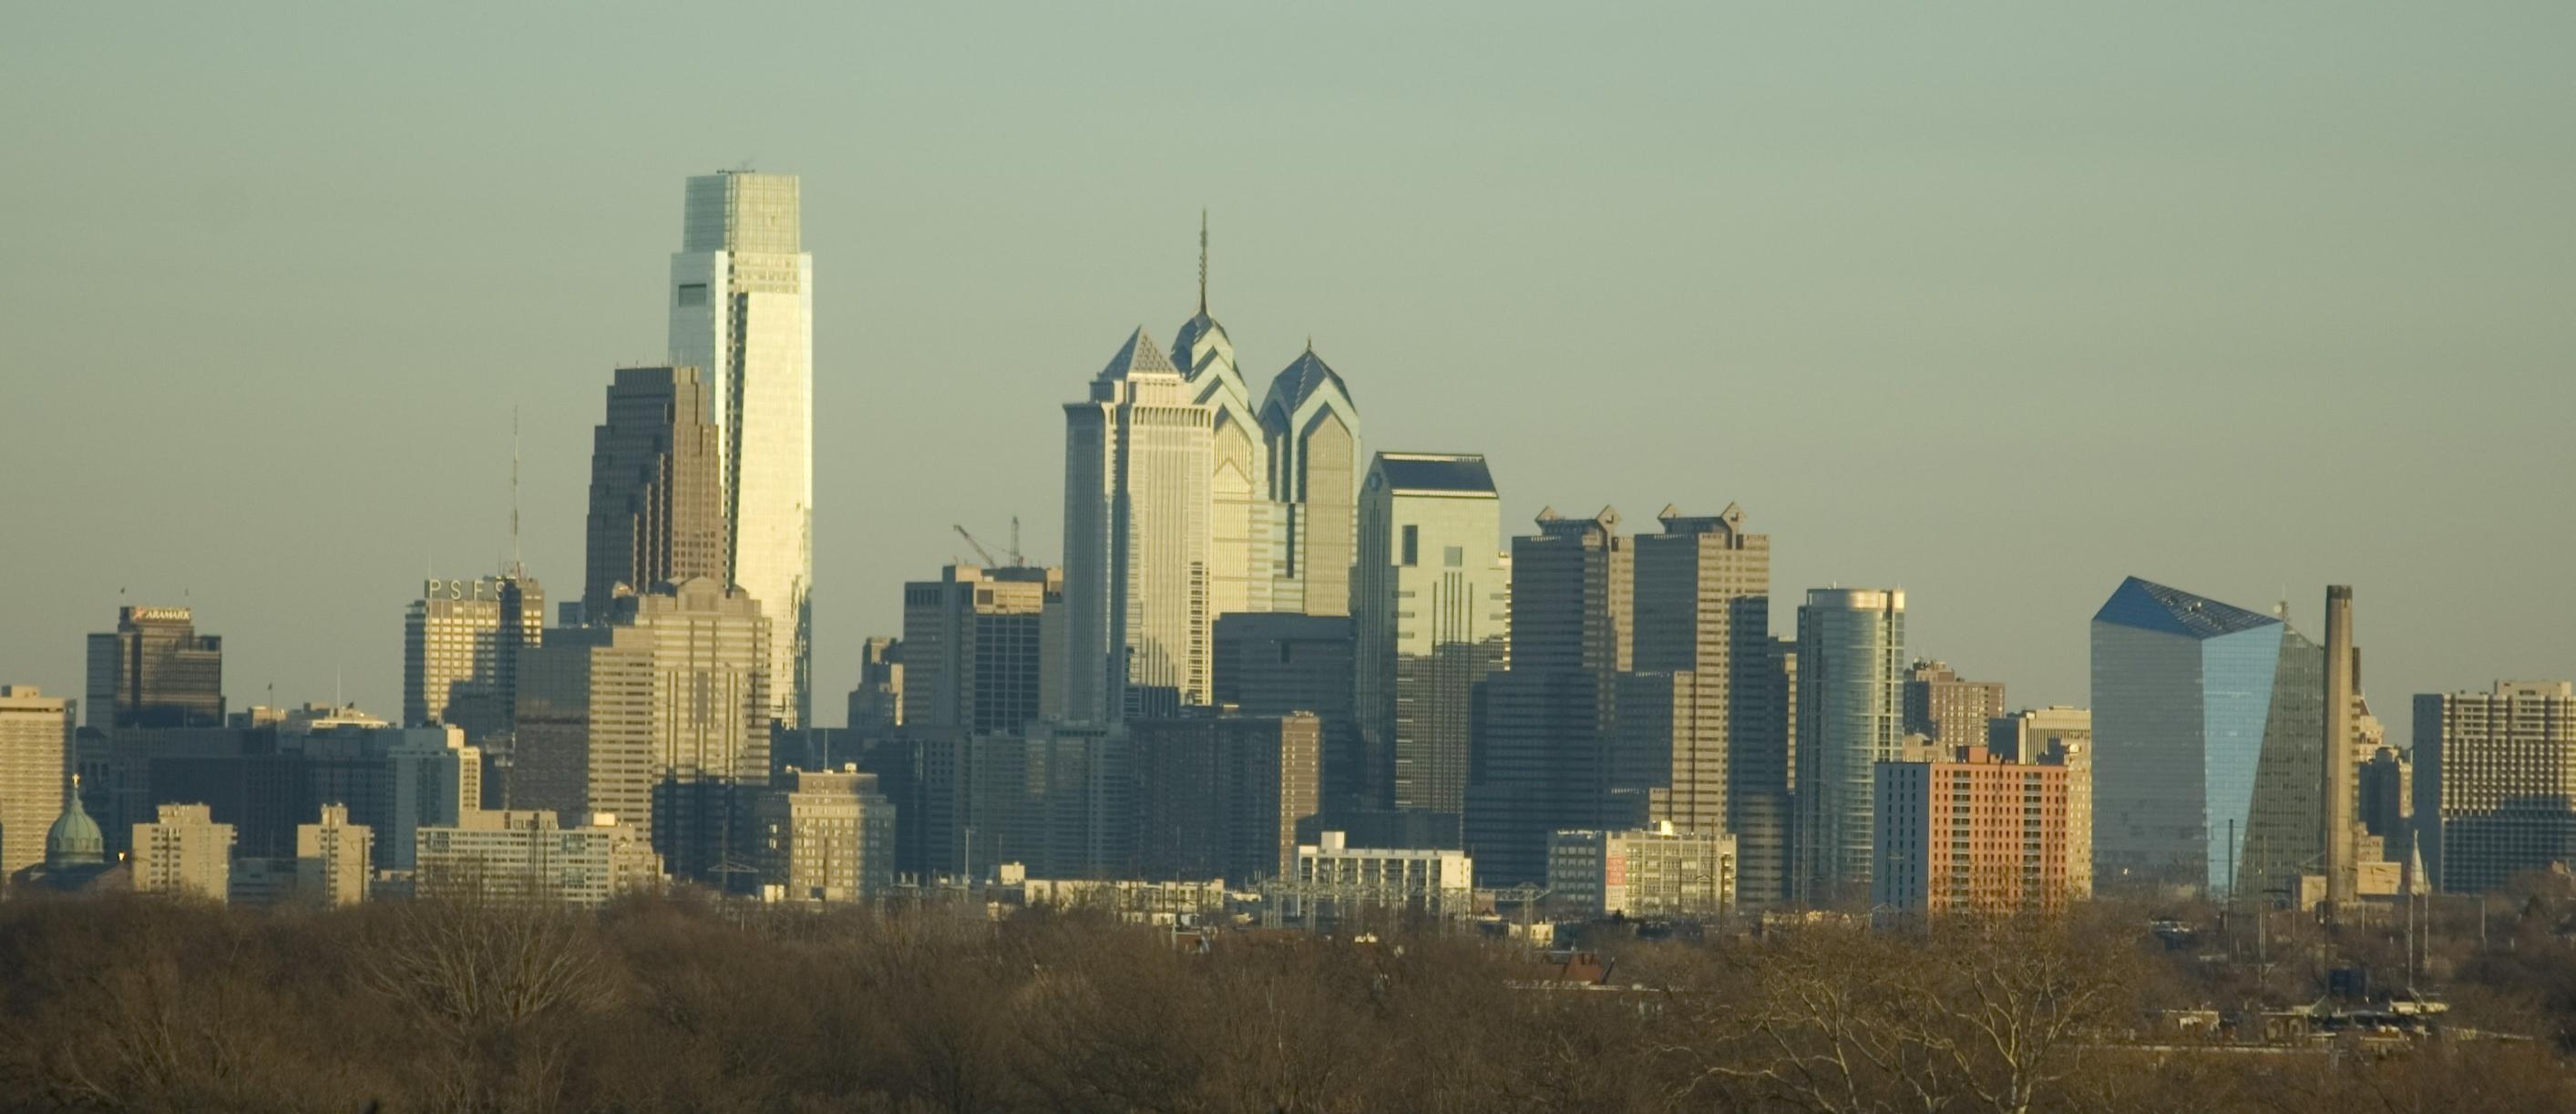 The philadelphia skyline - (#74118) - High Quality and Resolution ...